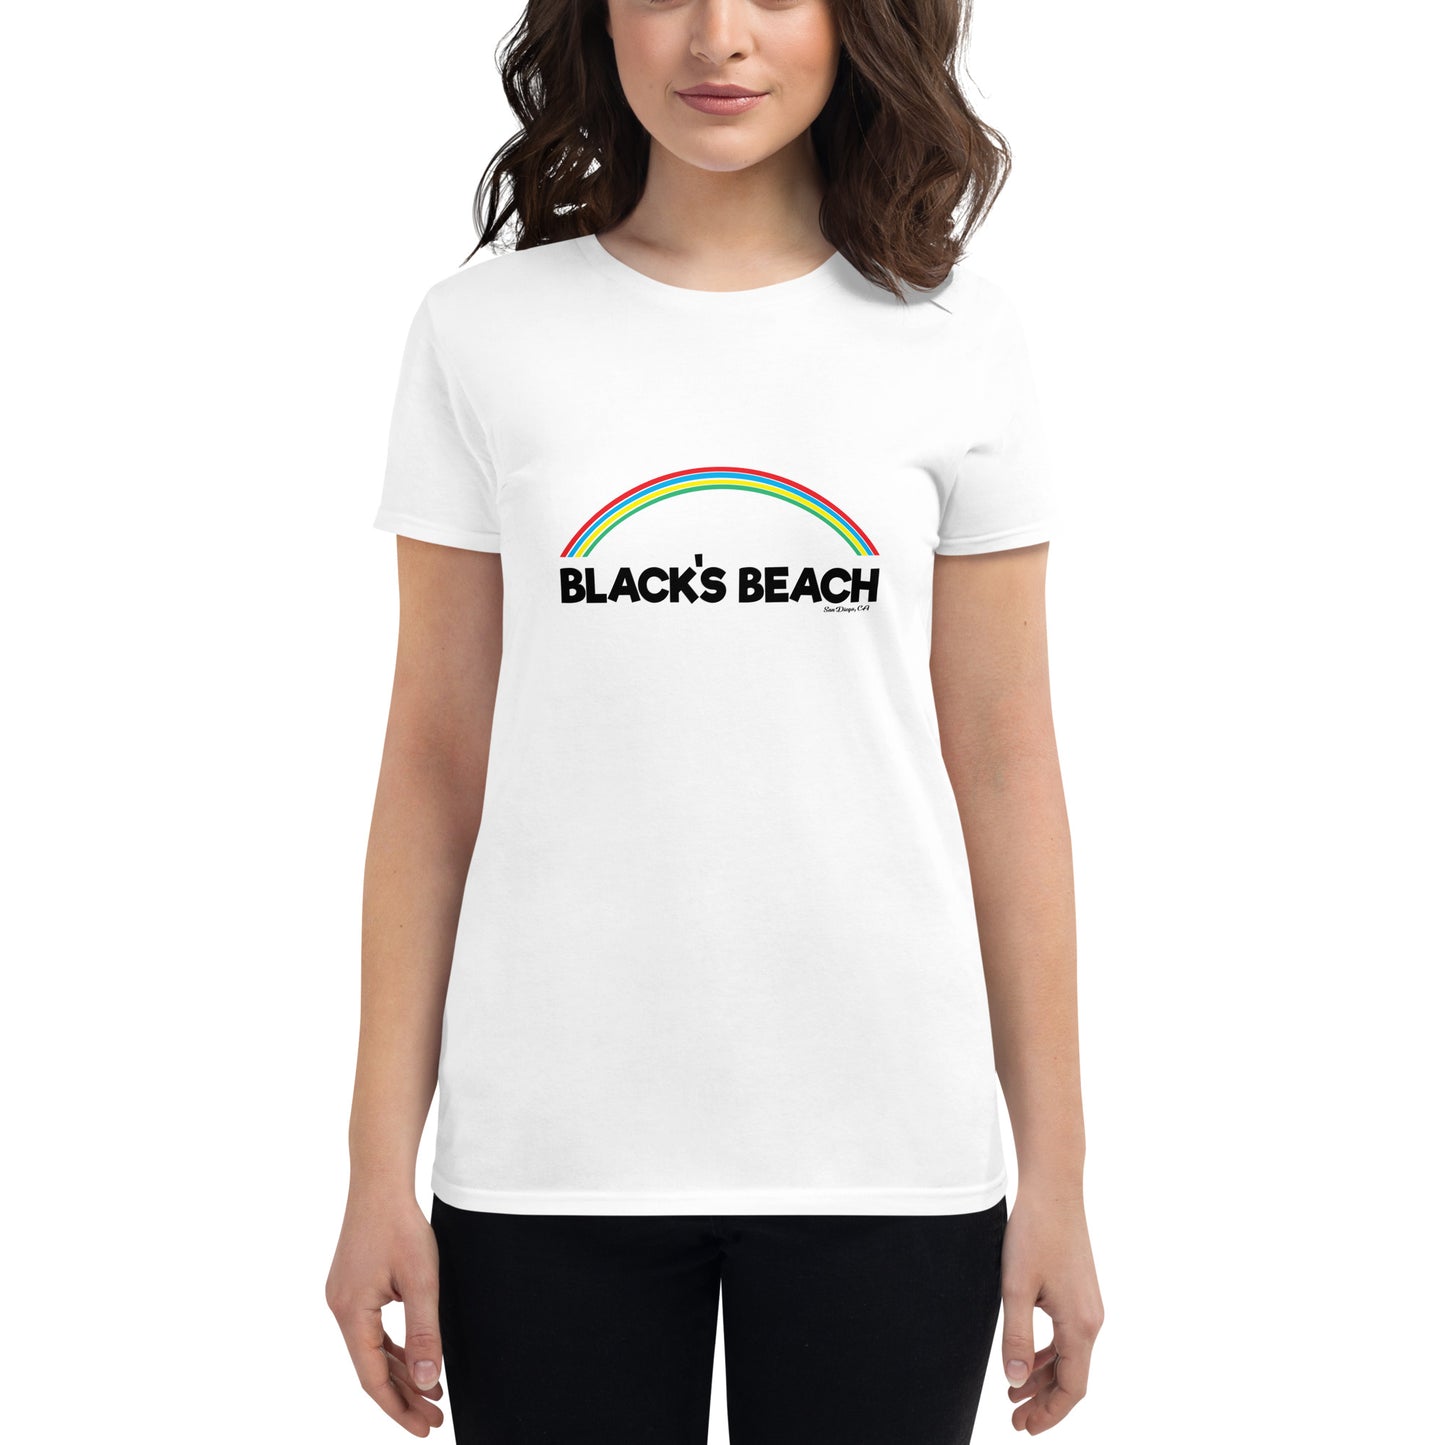 Black's Beach Tees / Style 16 / Women's short sleeve t-shirt